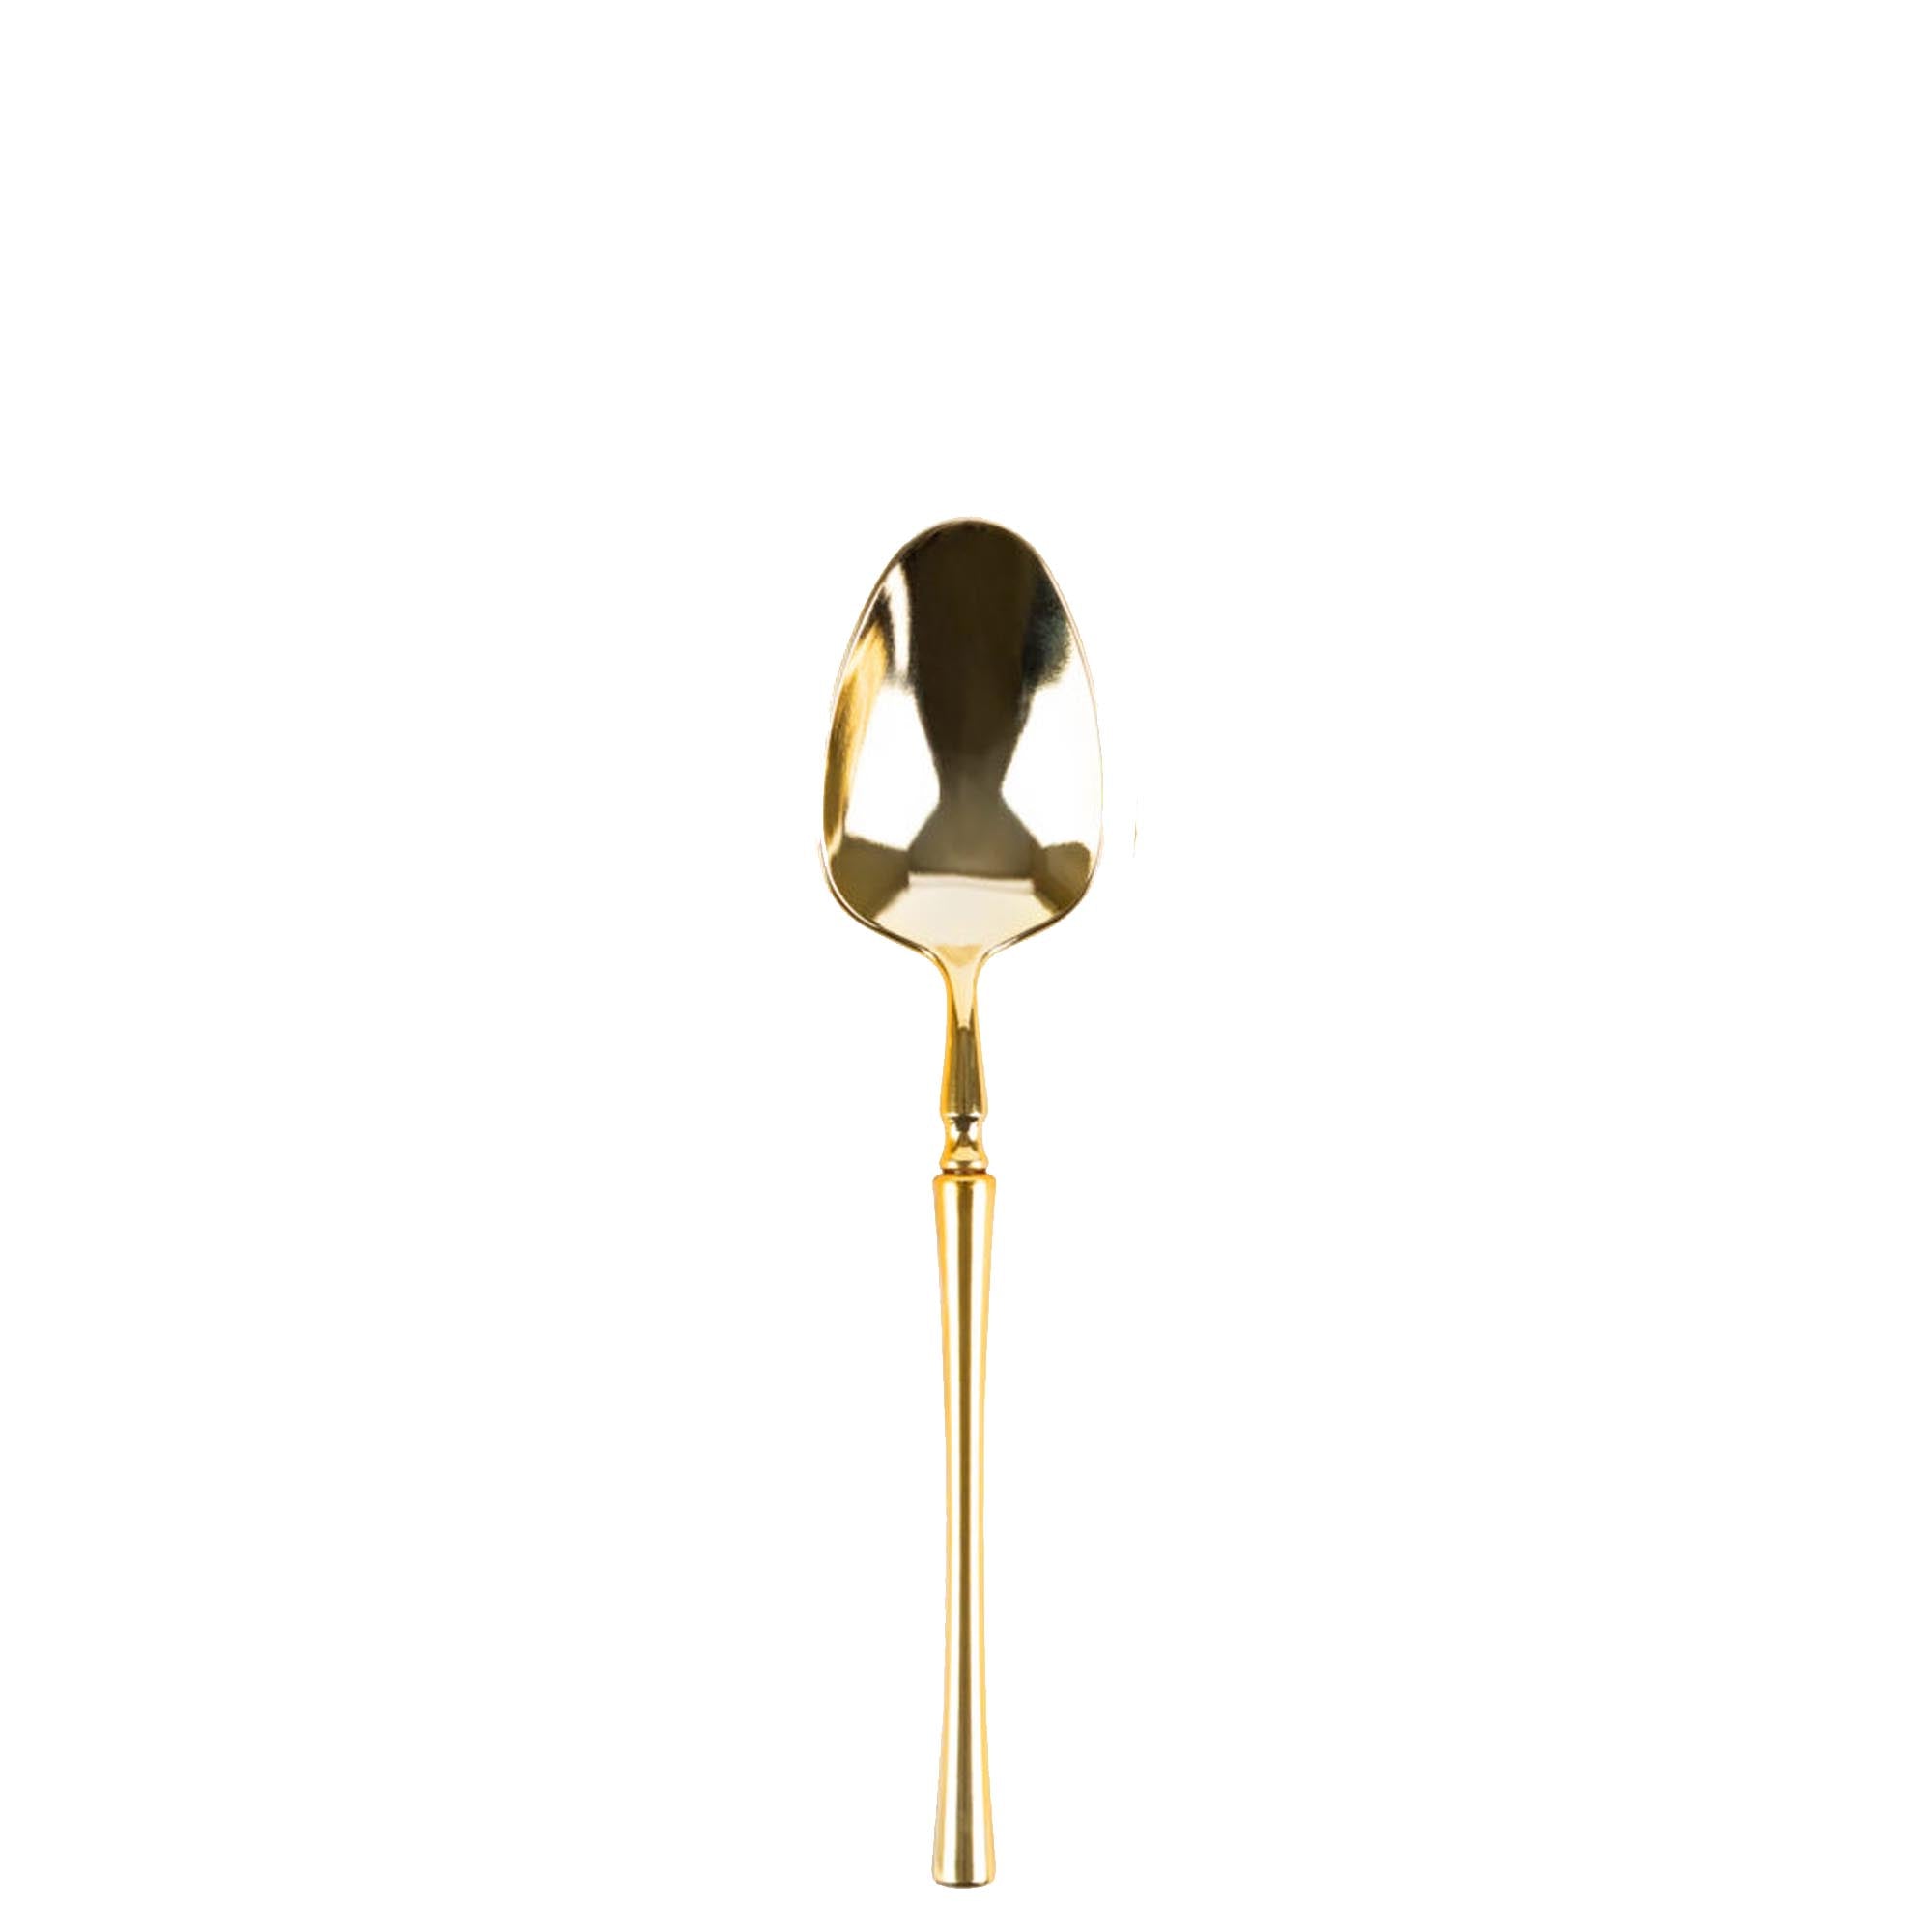 Plastic Tea Spoons Gold Infinity Flatware Collection